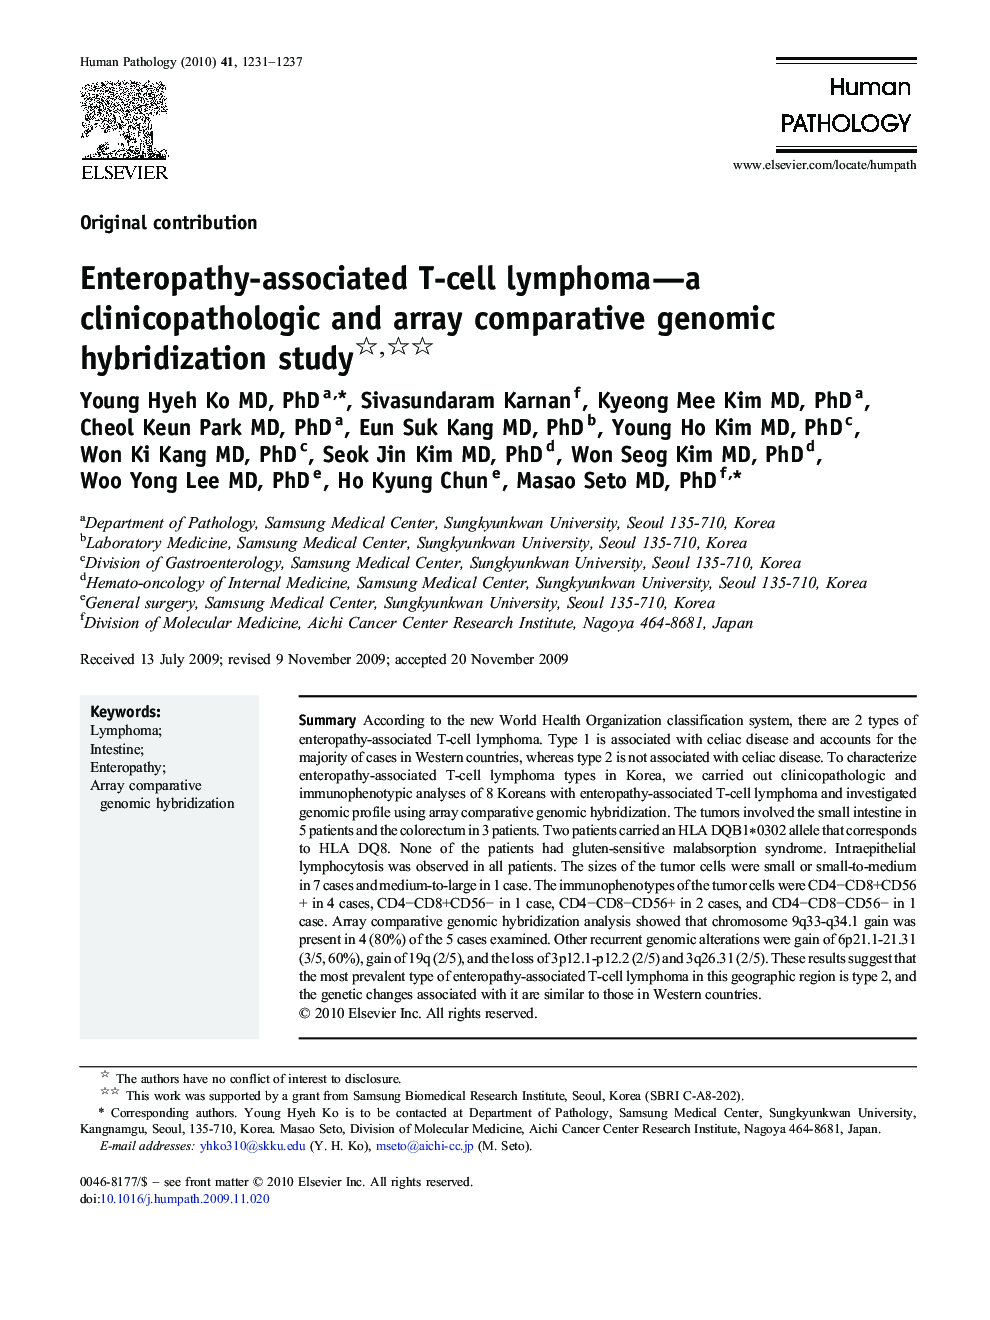 Enteropathy-associated T-cell lymphoma—a clinicopathologic and array comparative genomic hybridization study 